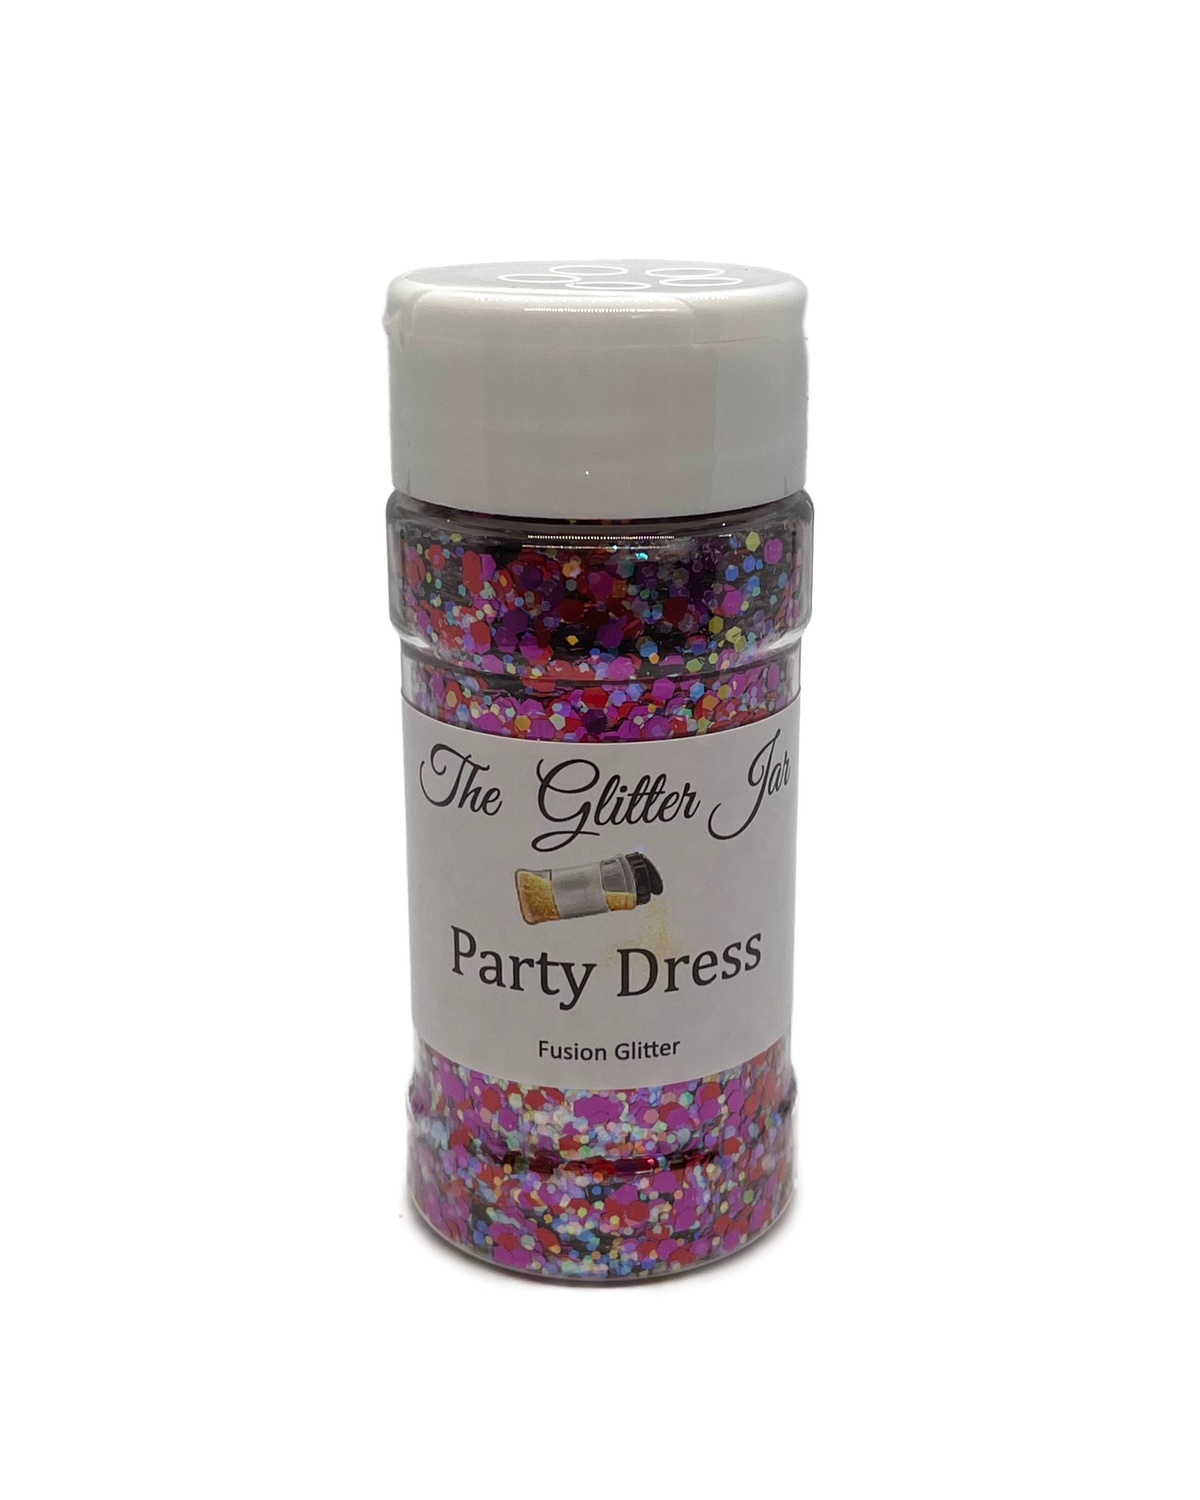 Party Dress Fusion Glitter The Glitter Jar